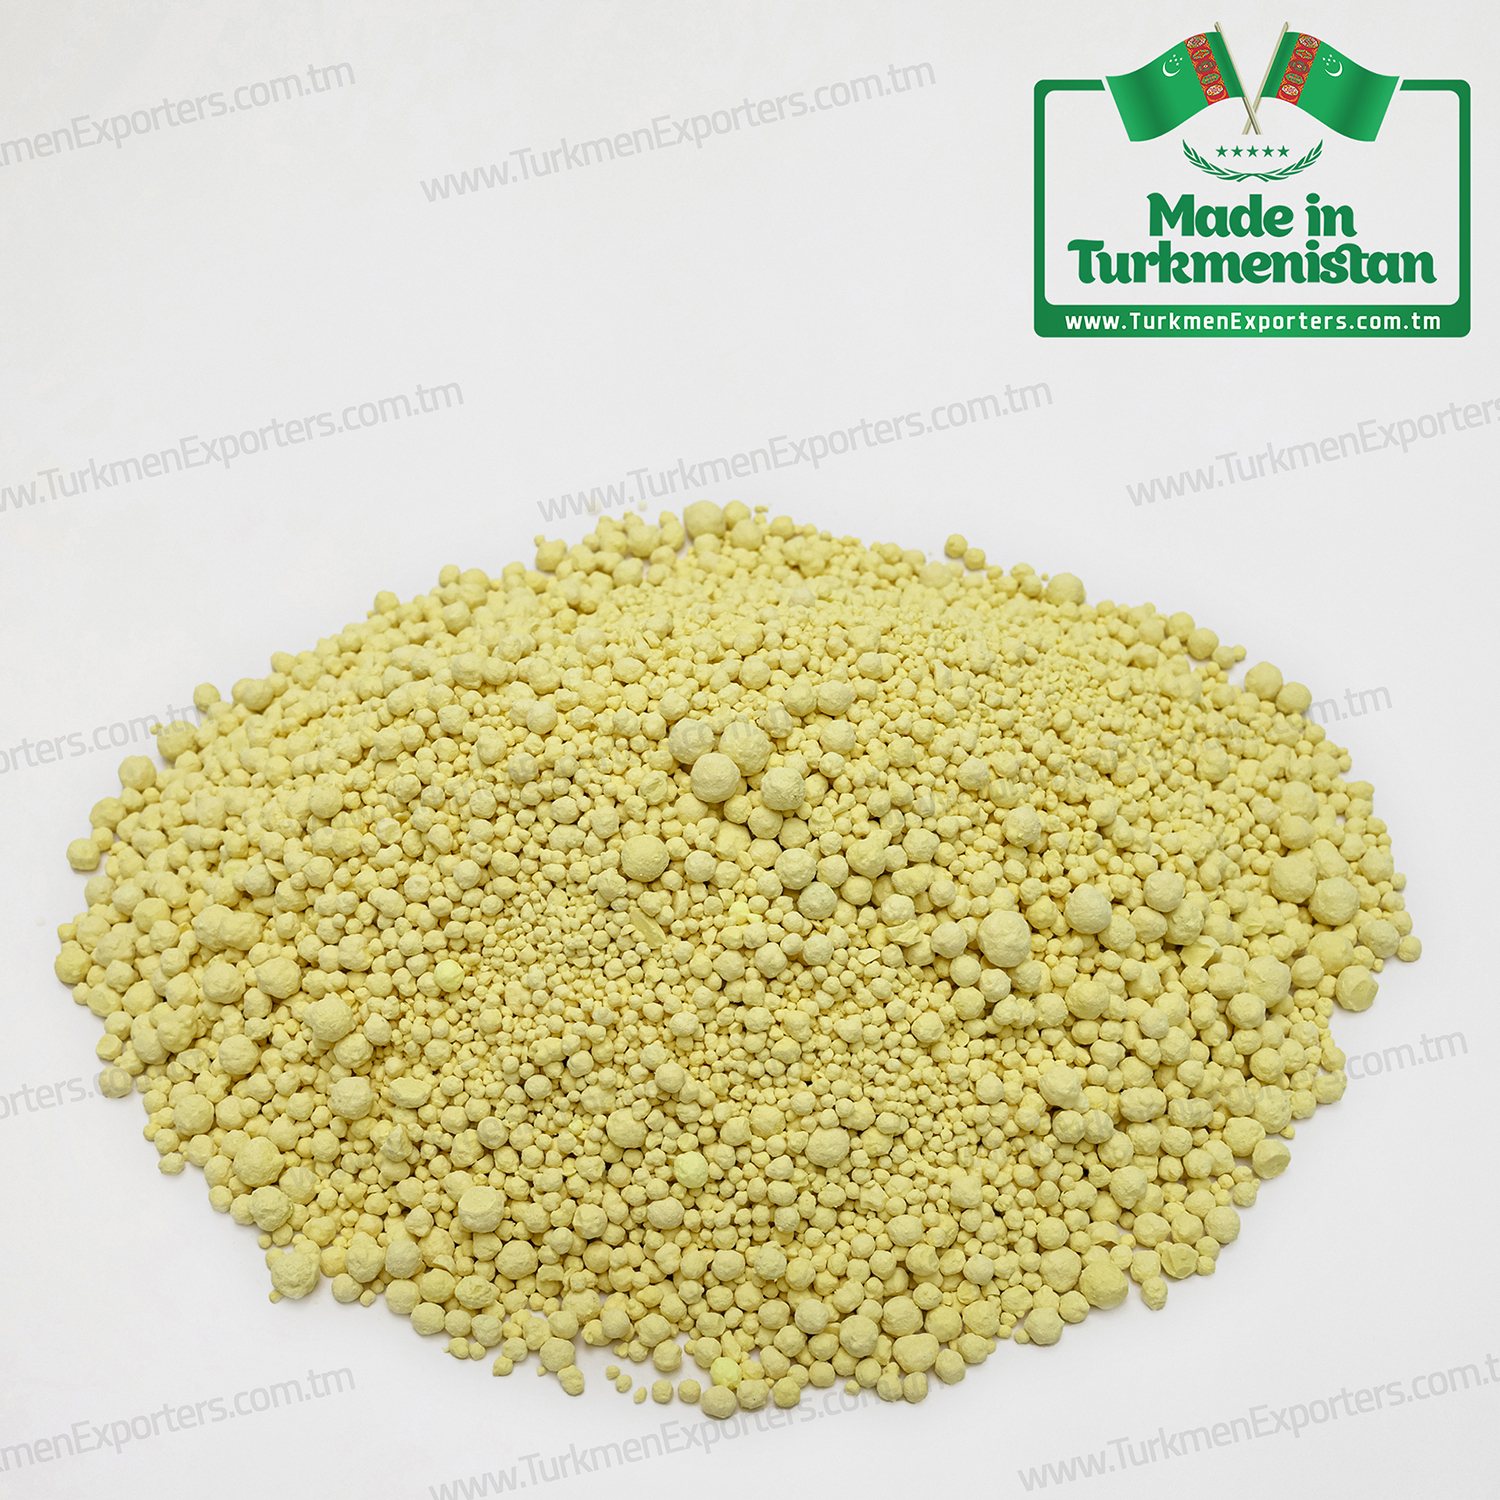 Granular sulphur wholesale for export from Turkmenistan | Turkmen Export, Import & Trading Services Company